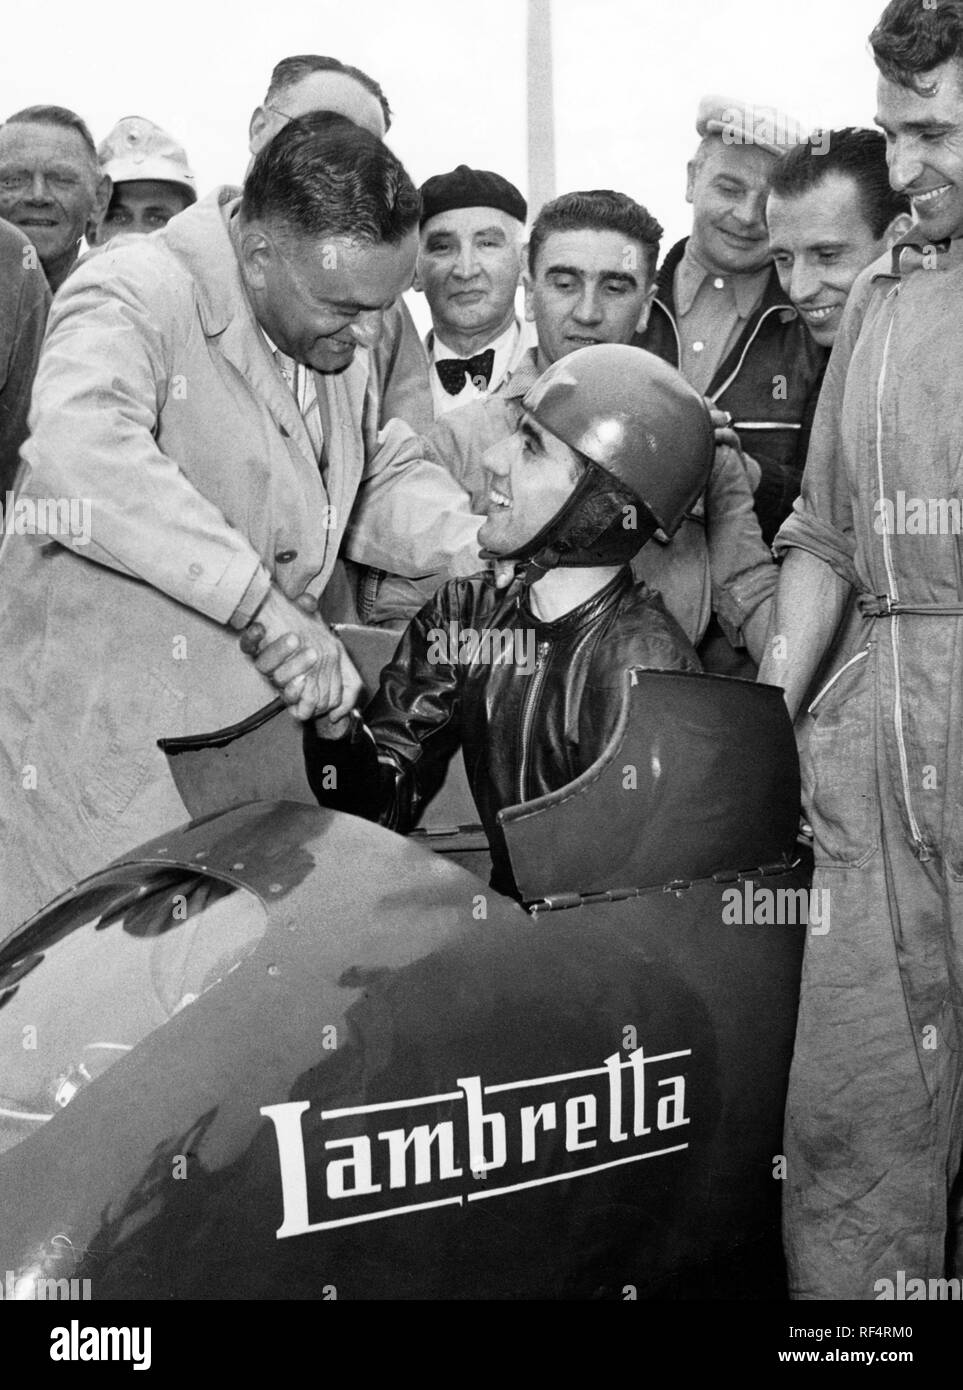 romolo ferri, 1950 Stock Photo